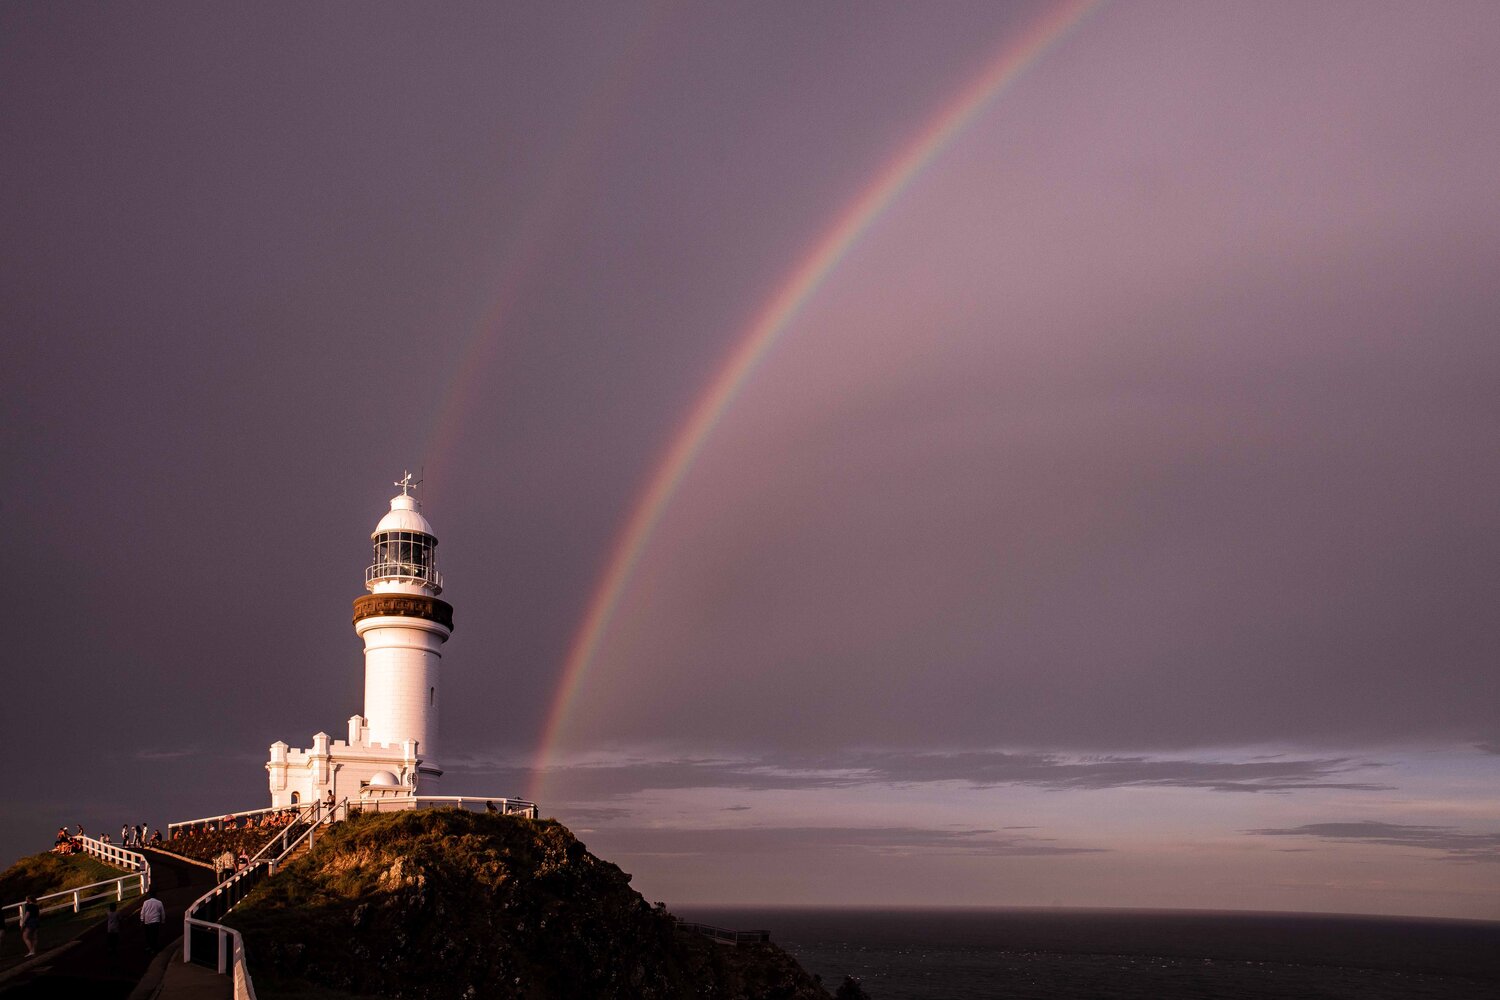 70 motivational Rainbow Quotes to inspire you on rainy days — Walk ...